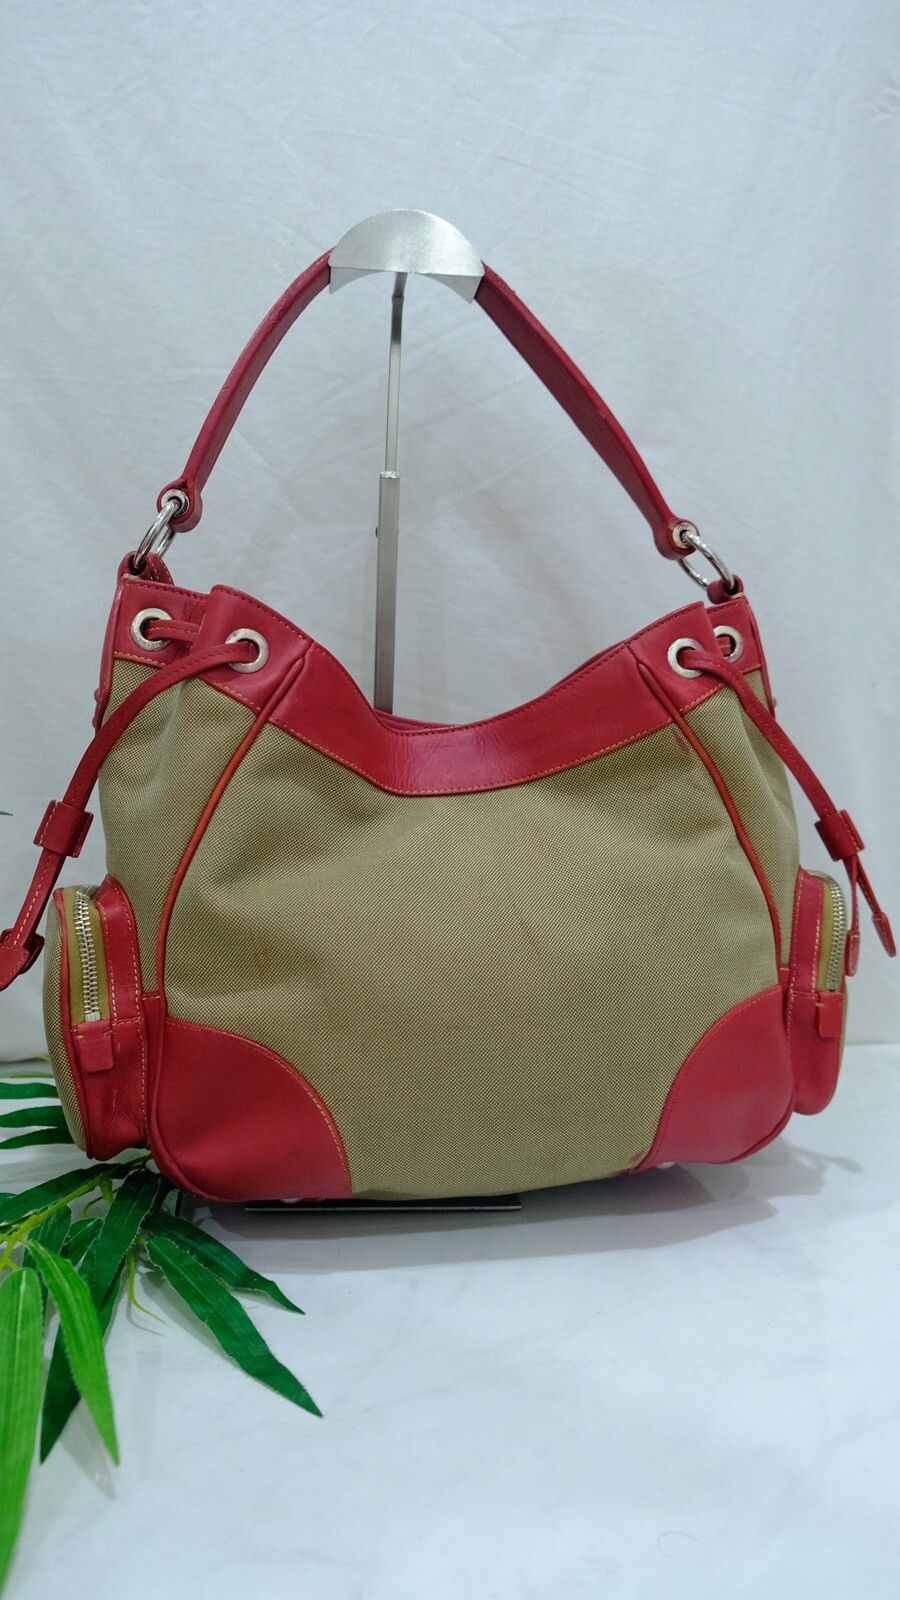 Authentic Prada Jacquard canvas red leather handbag - 3